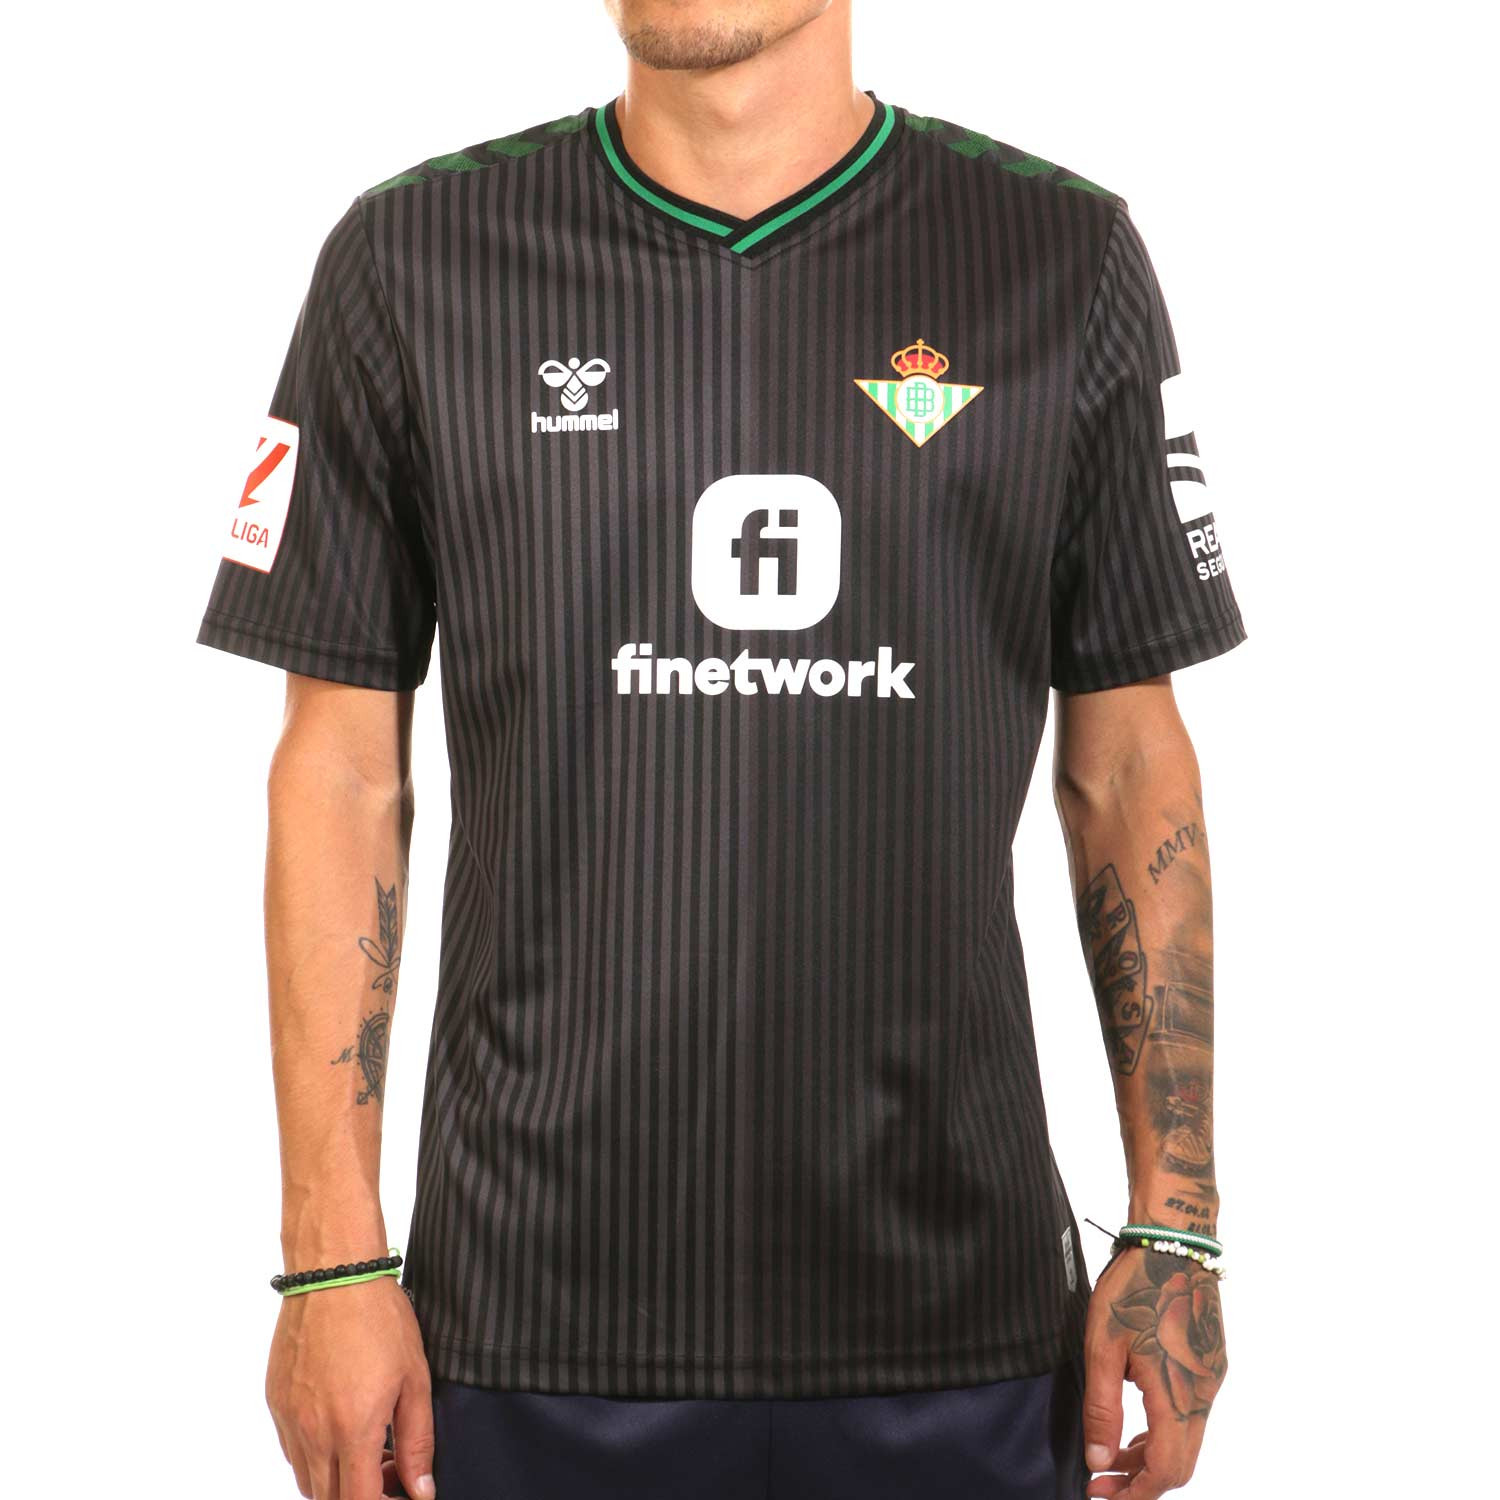 Camiseta Hummel 3a Real Betis 2022 2023 naranja